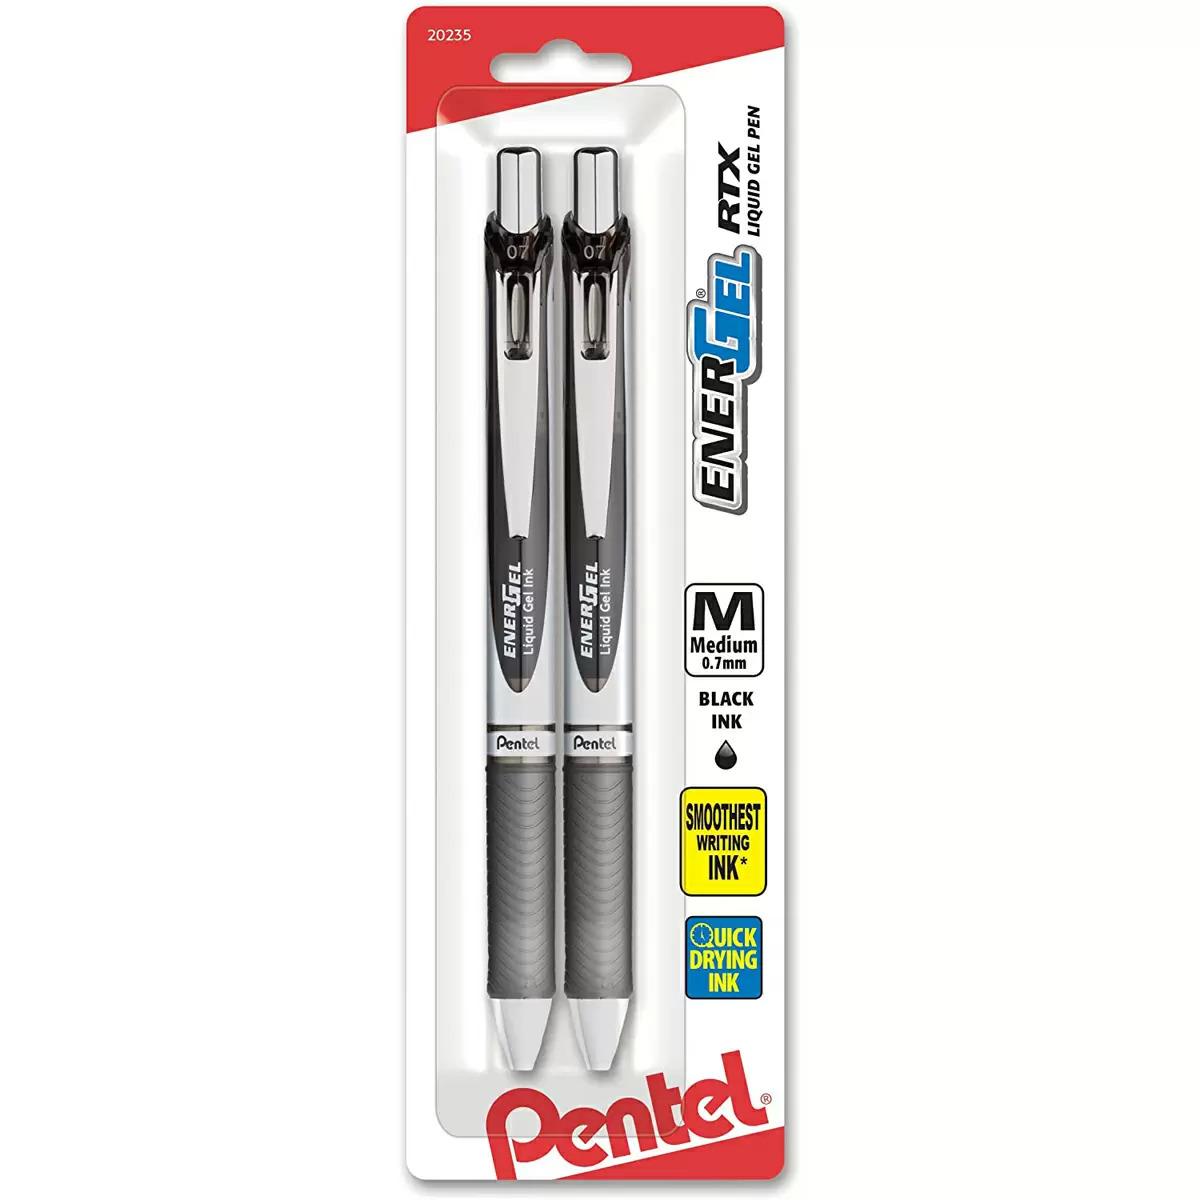 Pentel EnerGel Deluxe RTX Liquid Gel Pens 2 Pack for $2.24